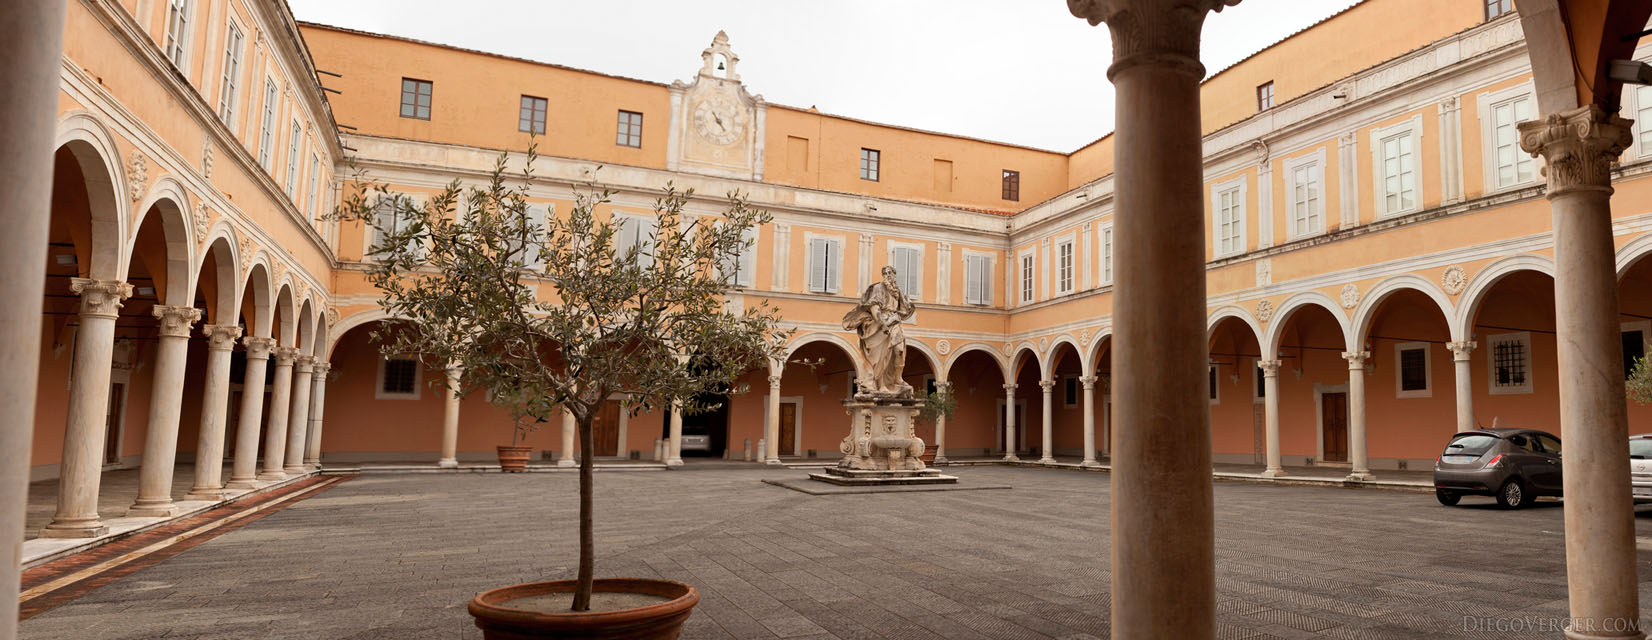 Vista panorámica del patio del Palazzo dell'Arcivescovado - Pisa, Italia